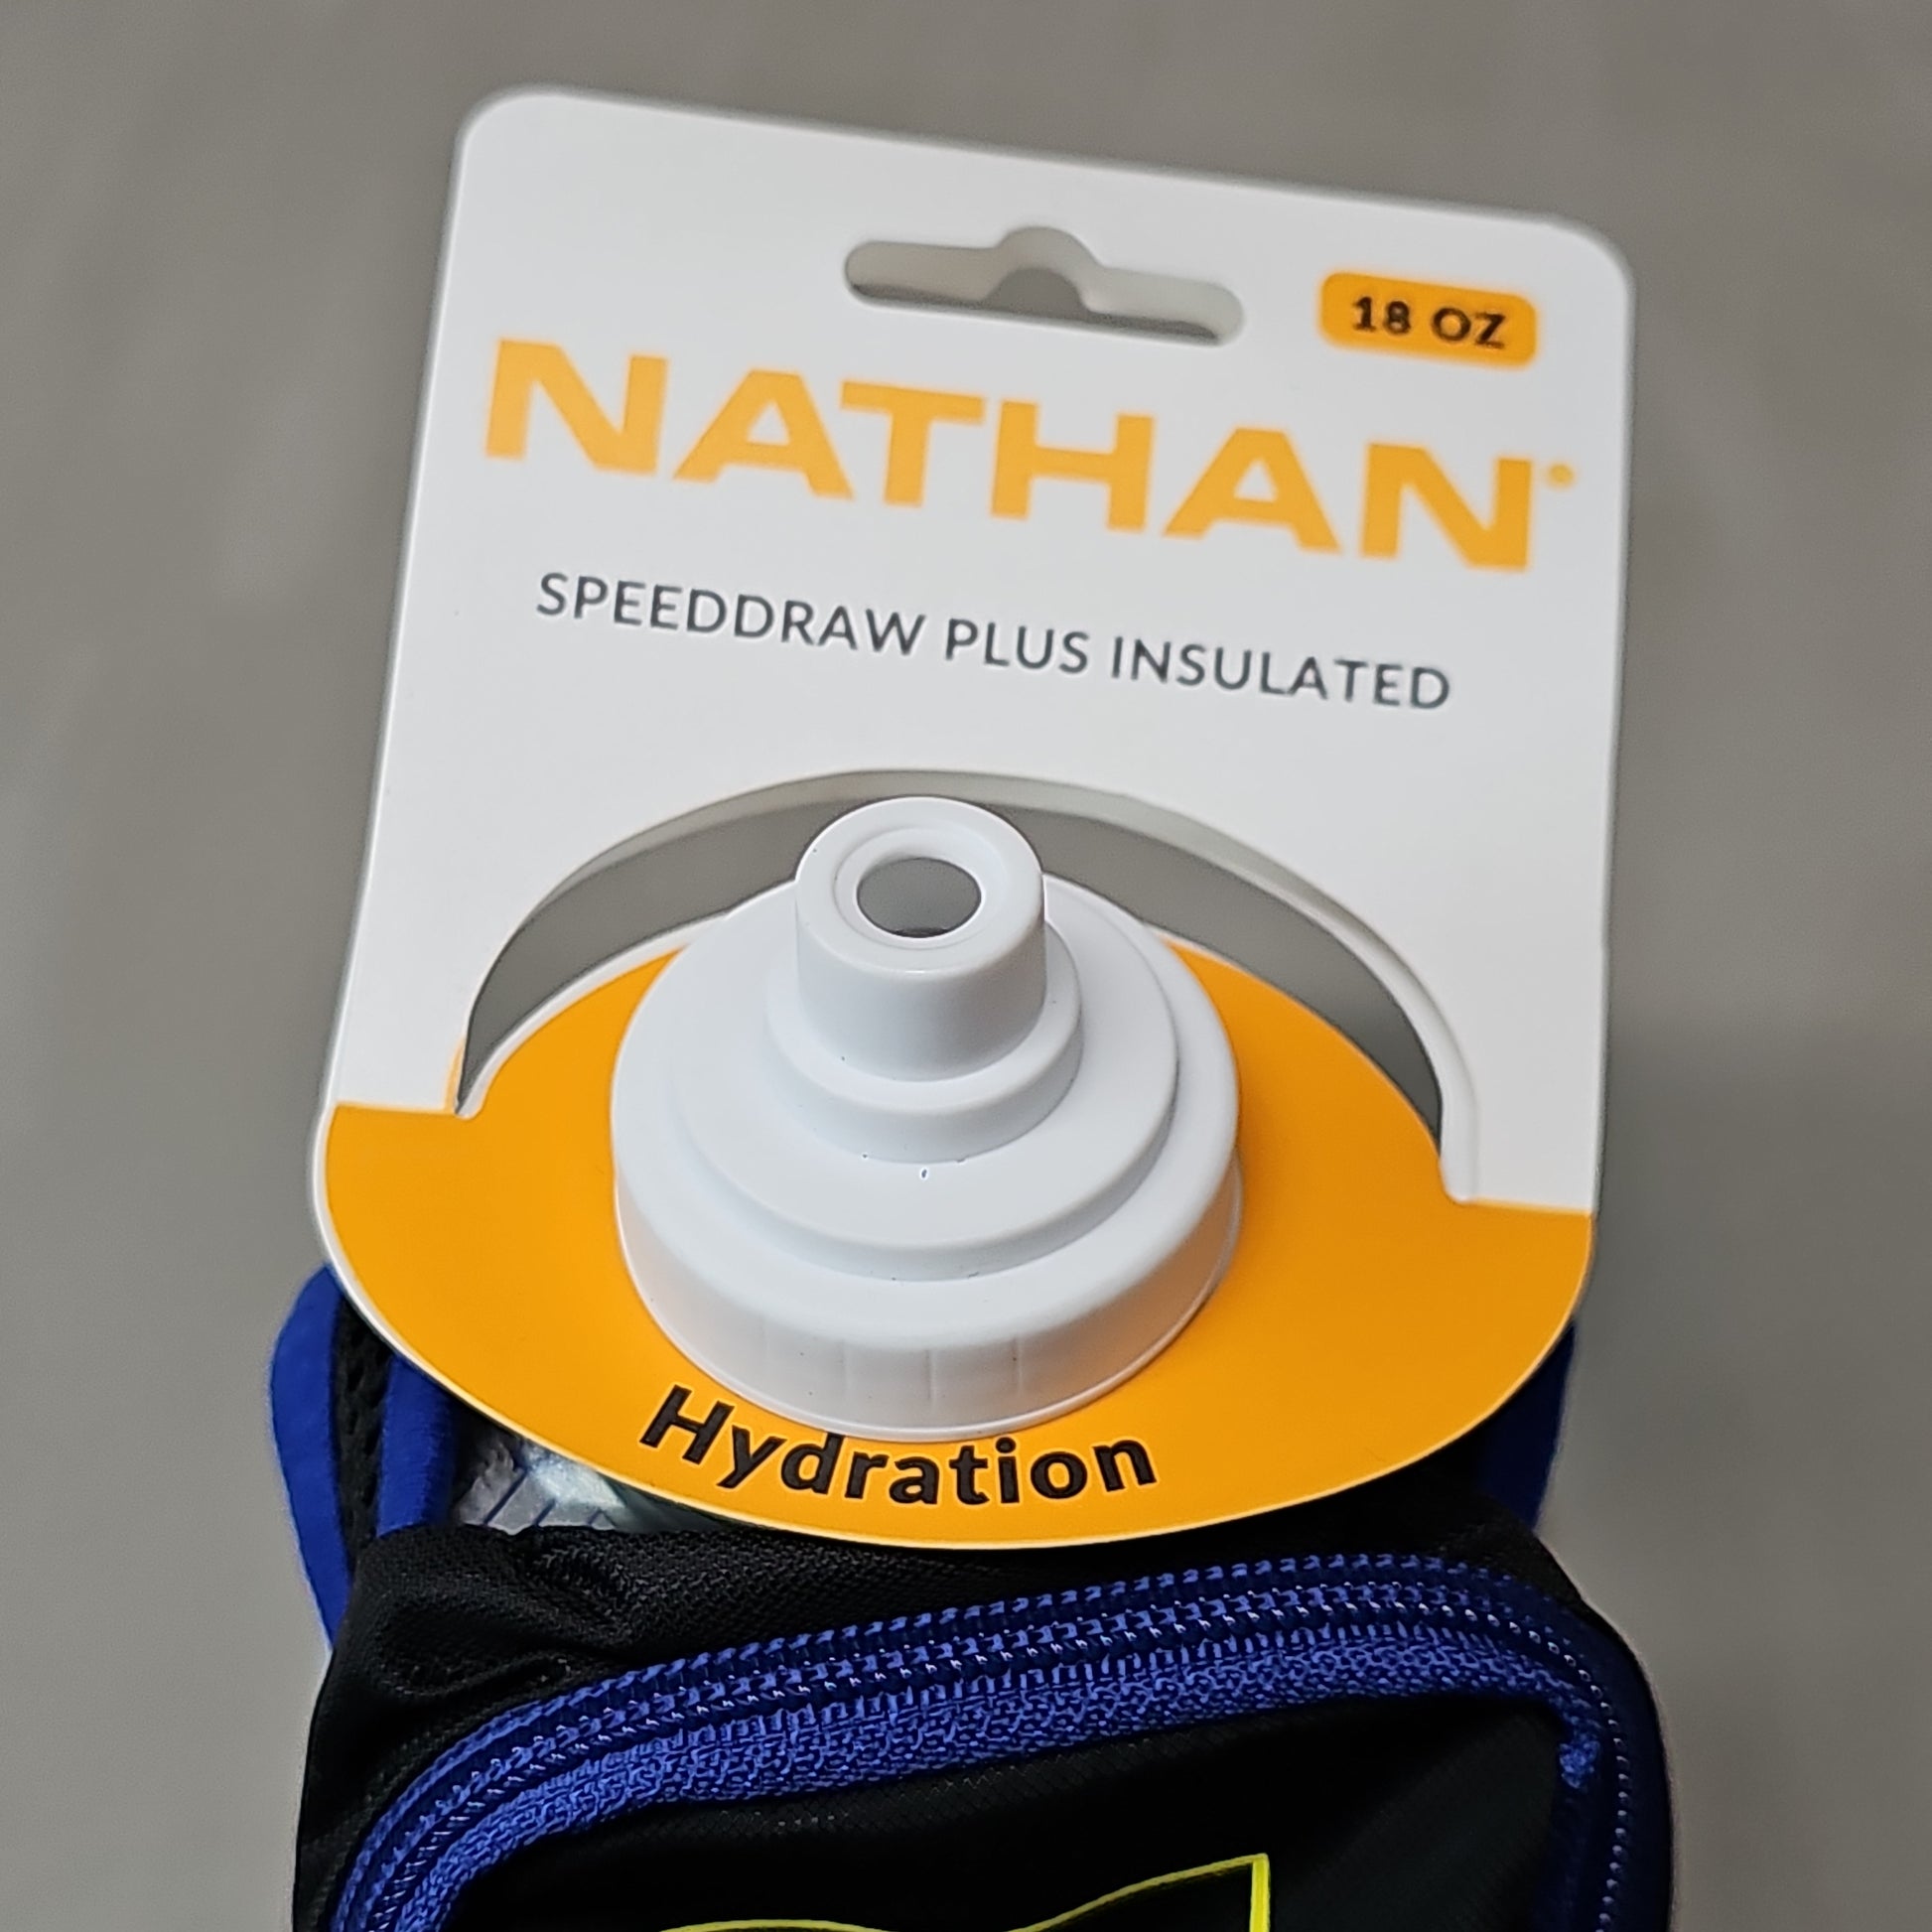 Nathan Speeddraw Insulated Flask 18 oz